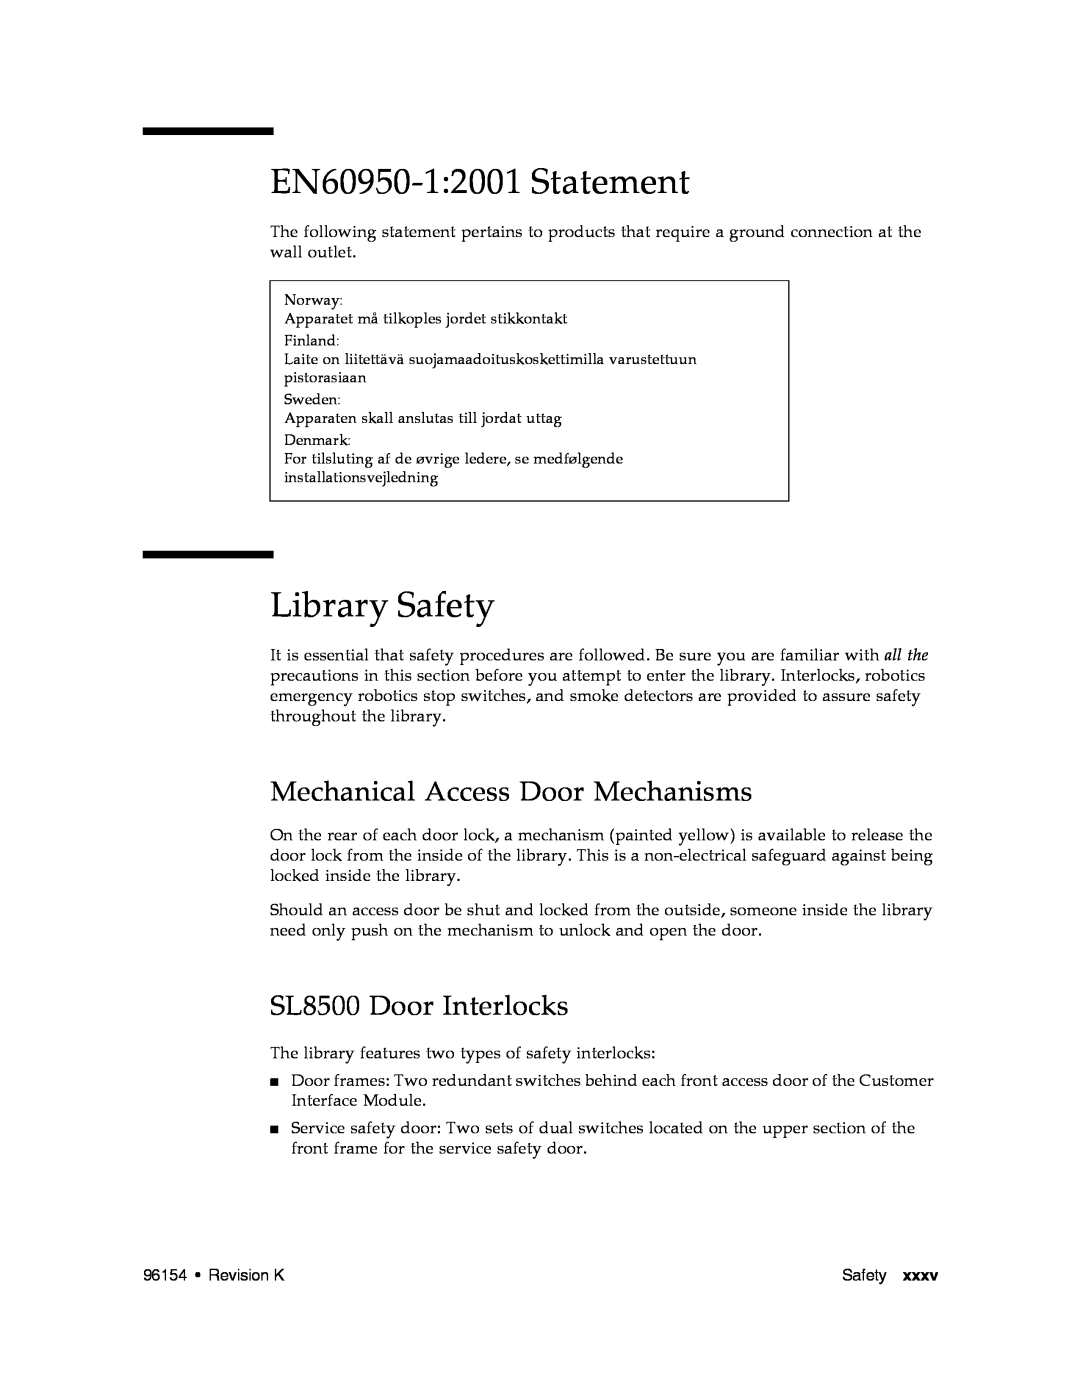 Sun Microsystems EN60950-12001 Statement, Library Safety, Mechanical Access Door Mechanisms, SL8500 Door Interlocks 